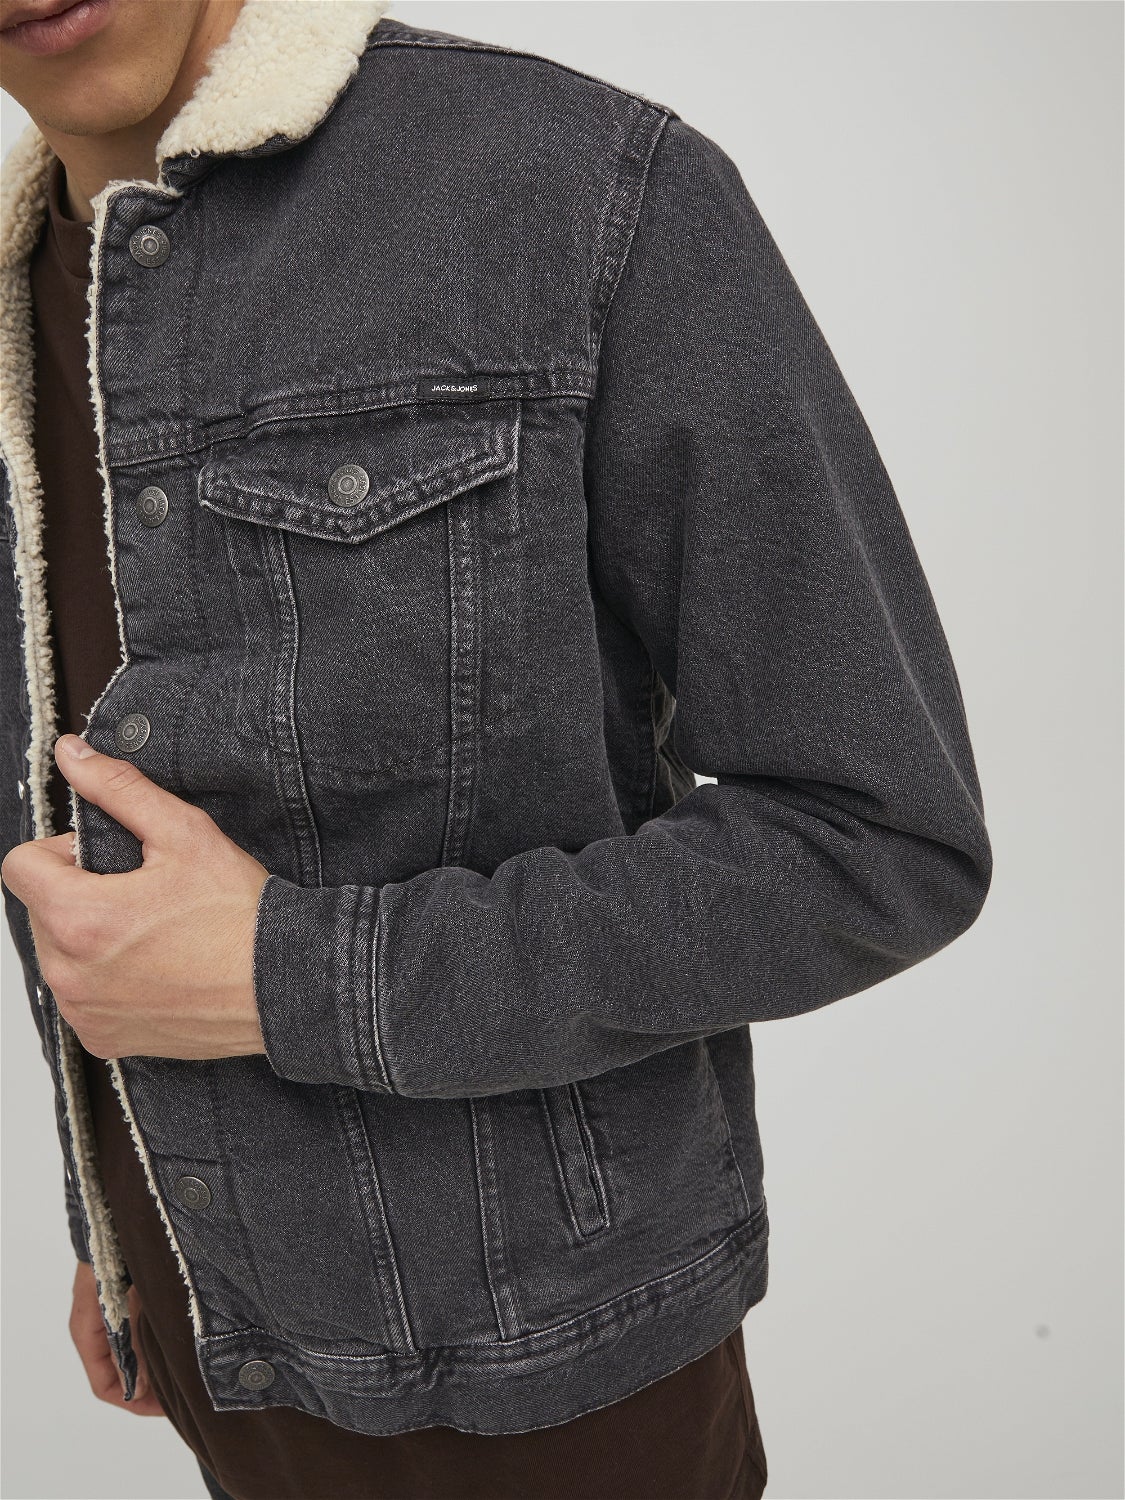 Jack & Jones Alvin Men's Denim Jackets Comfort fit Long Sleeve, Blue Denim,  L : Buy Online at Best Price in KSA - Souq is now Amazon.sa: Fashion